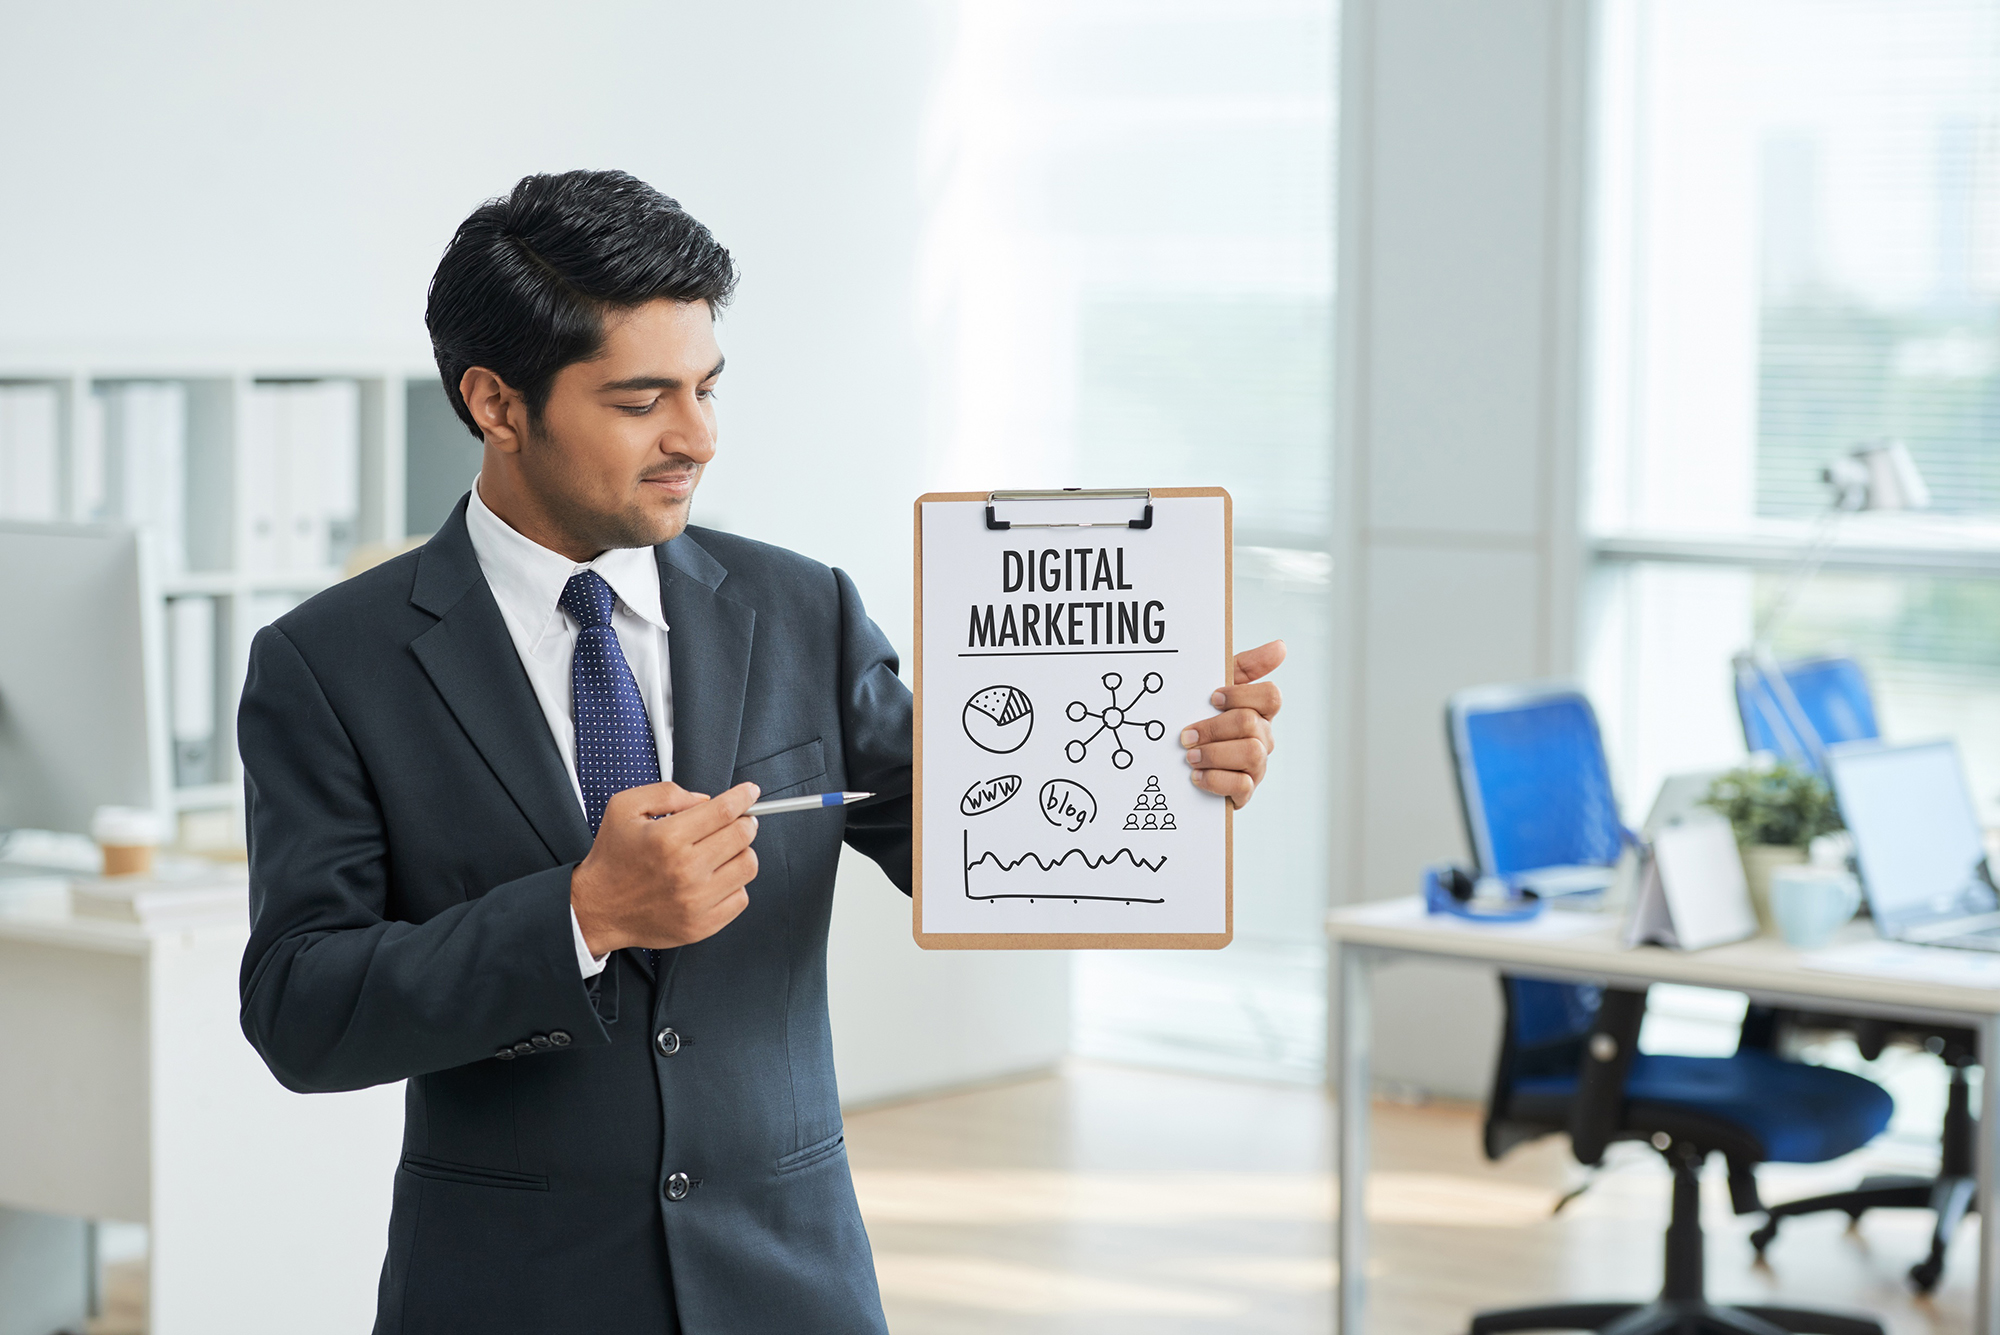 A man holding board with Digital Marketing written on it